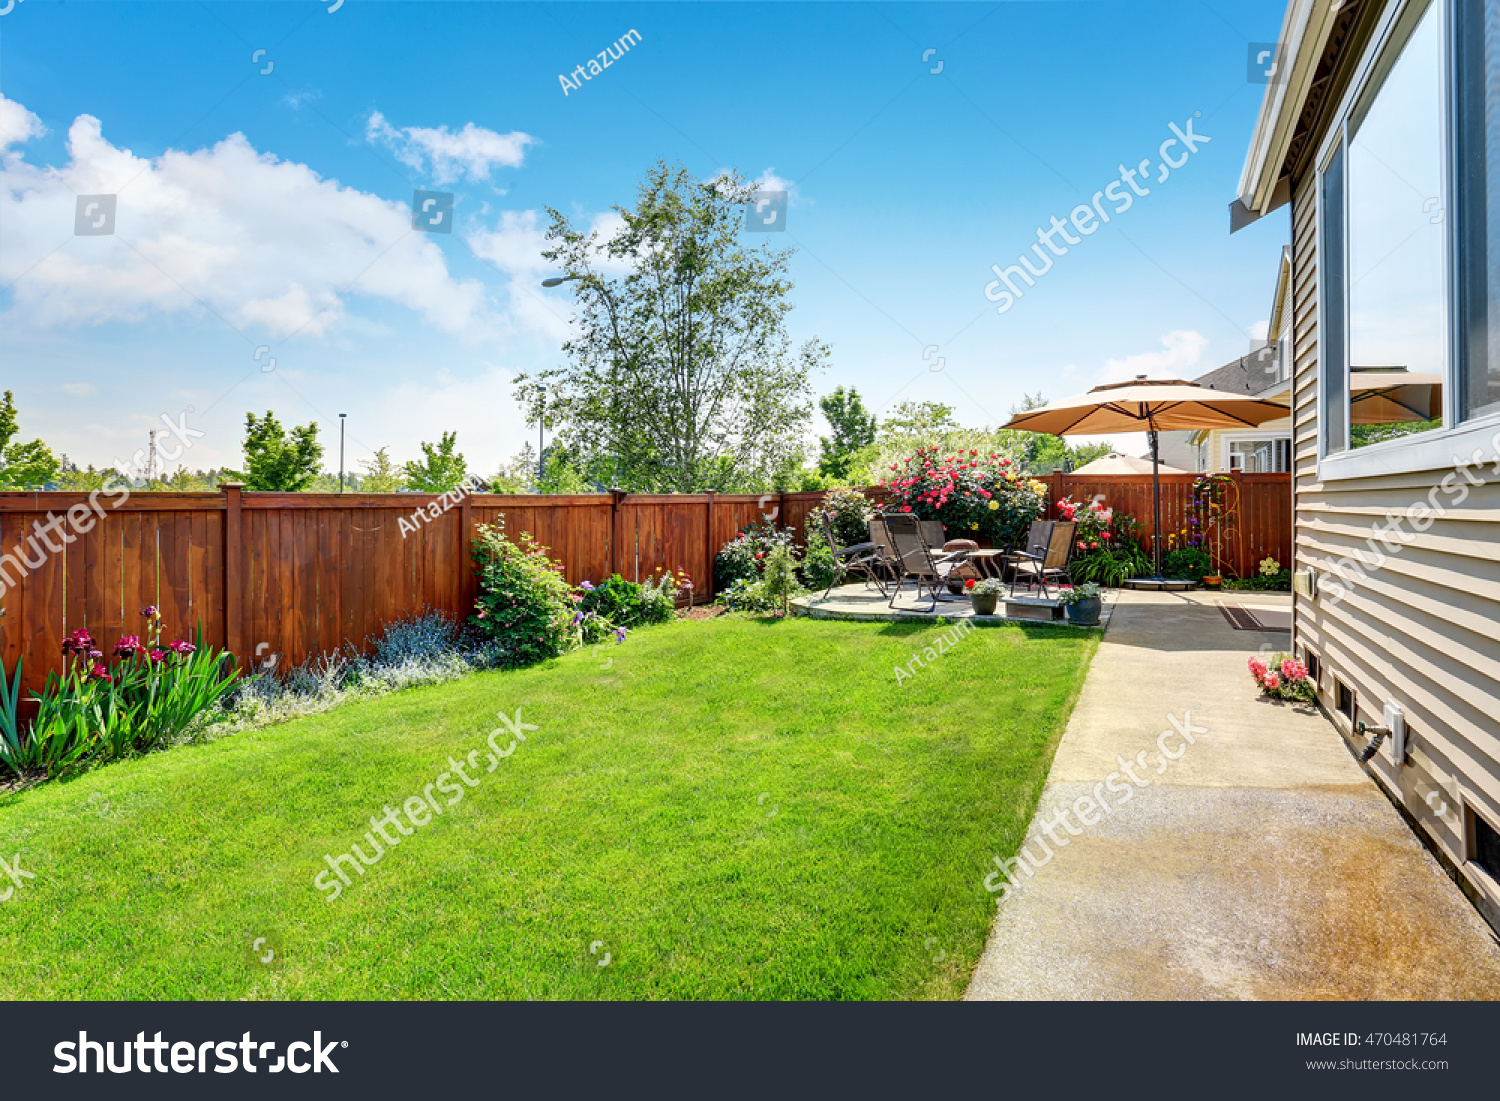 Beautiful landscape design for backyard garden and patio area on concrete floor. Northwest, USA #470481764